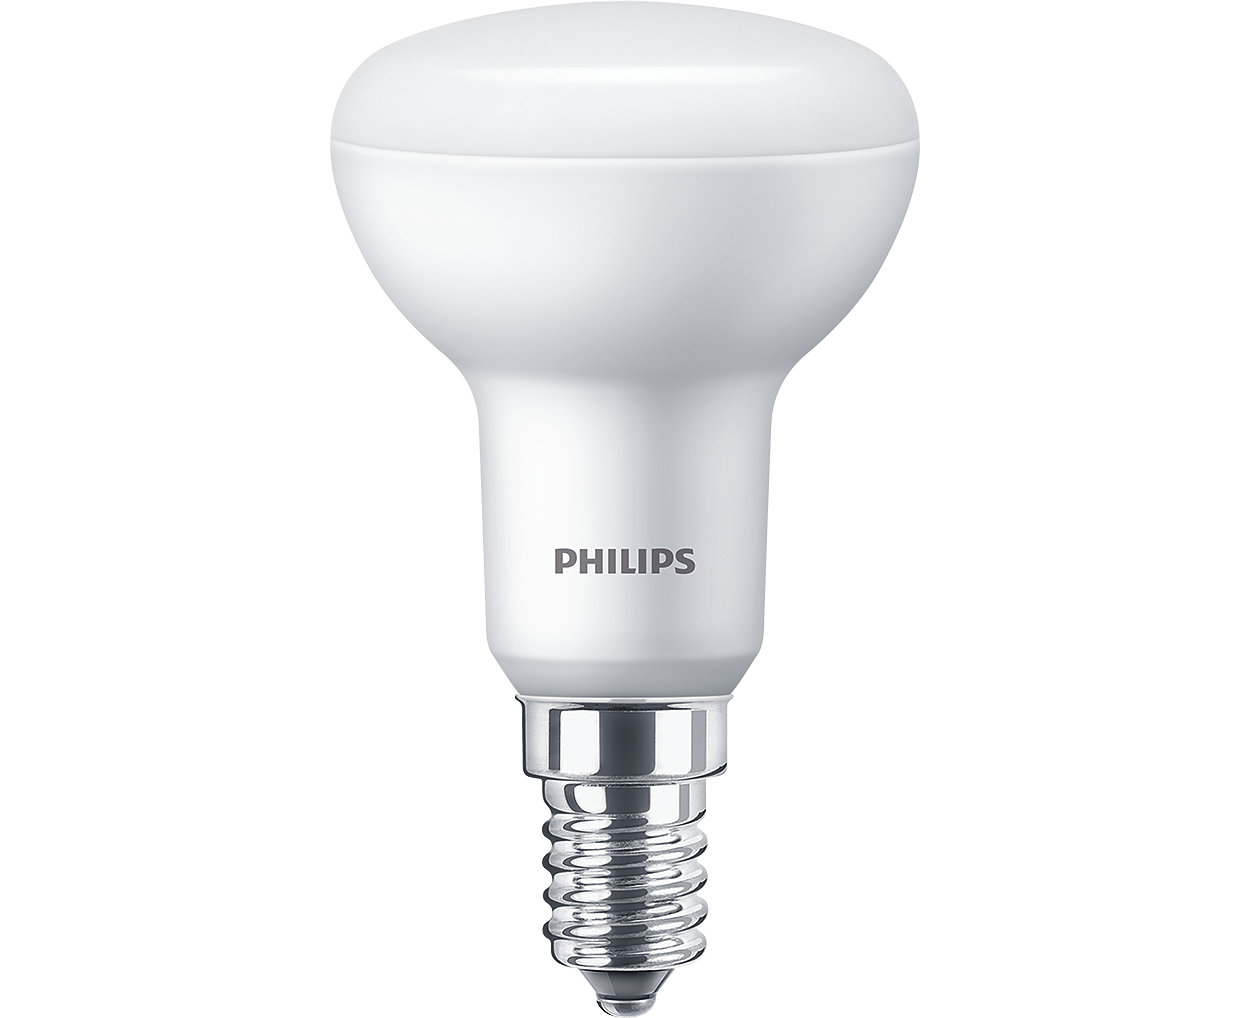 meel haai Leerling ESS LEDspot 6W 640lm E14 R50 840 | 929002965687 | Philips lighting